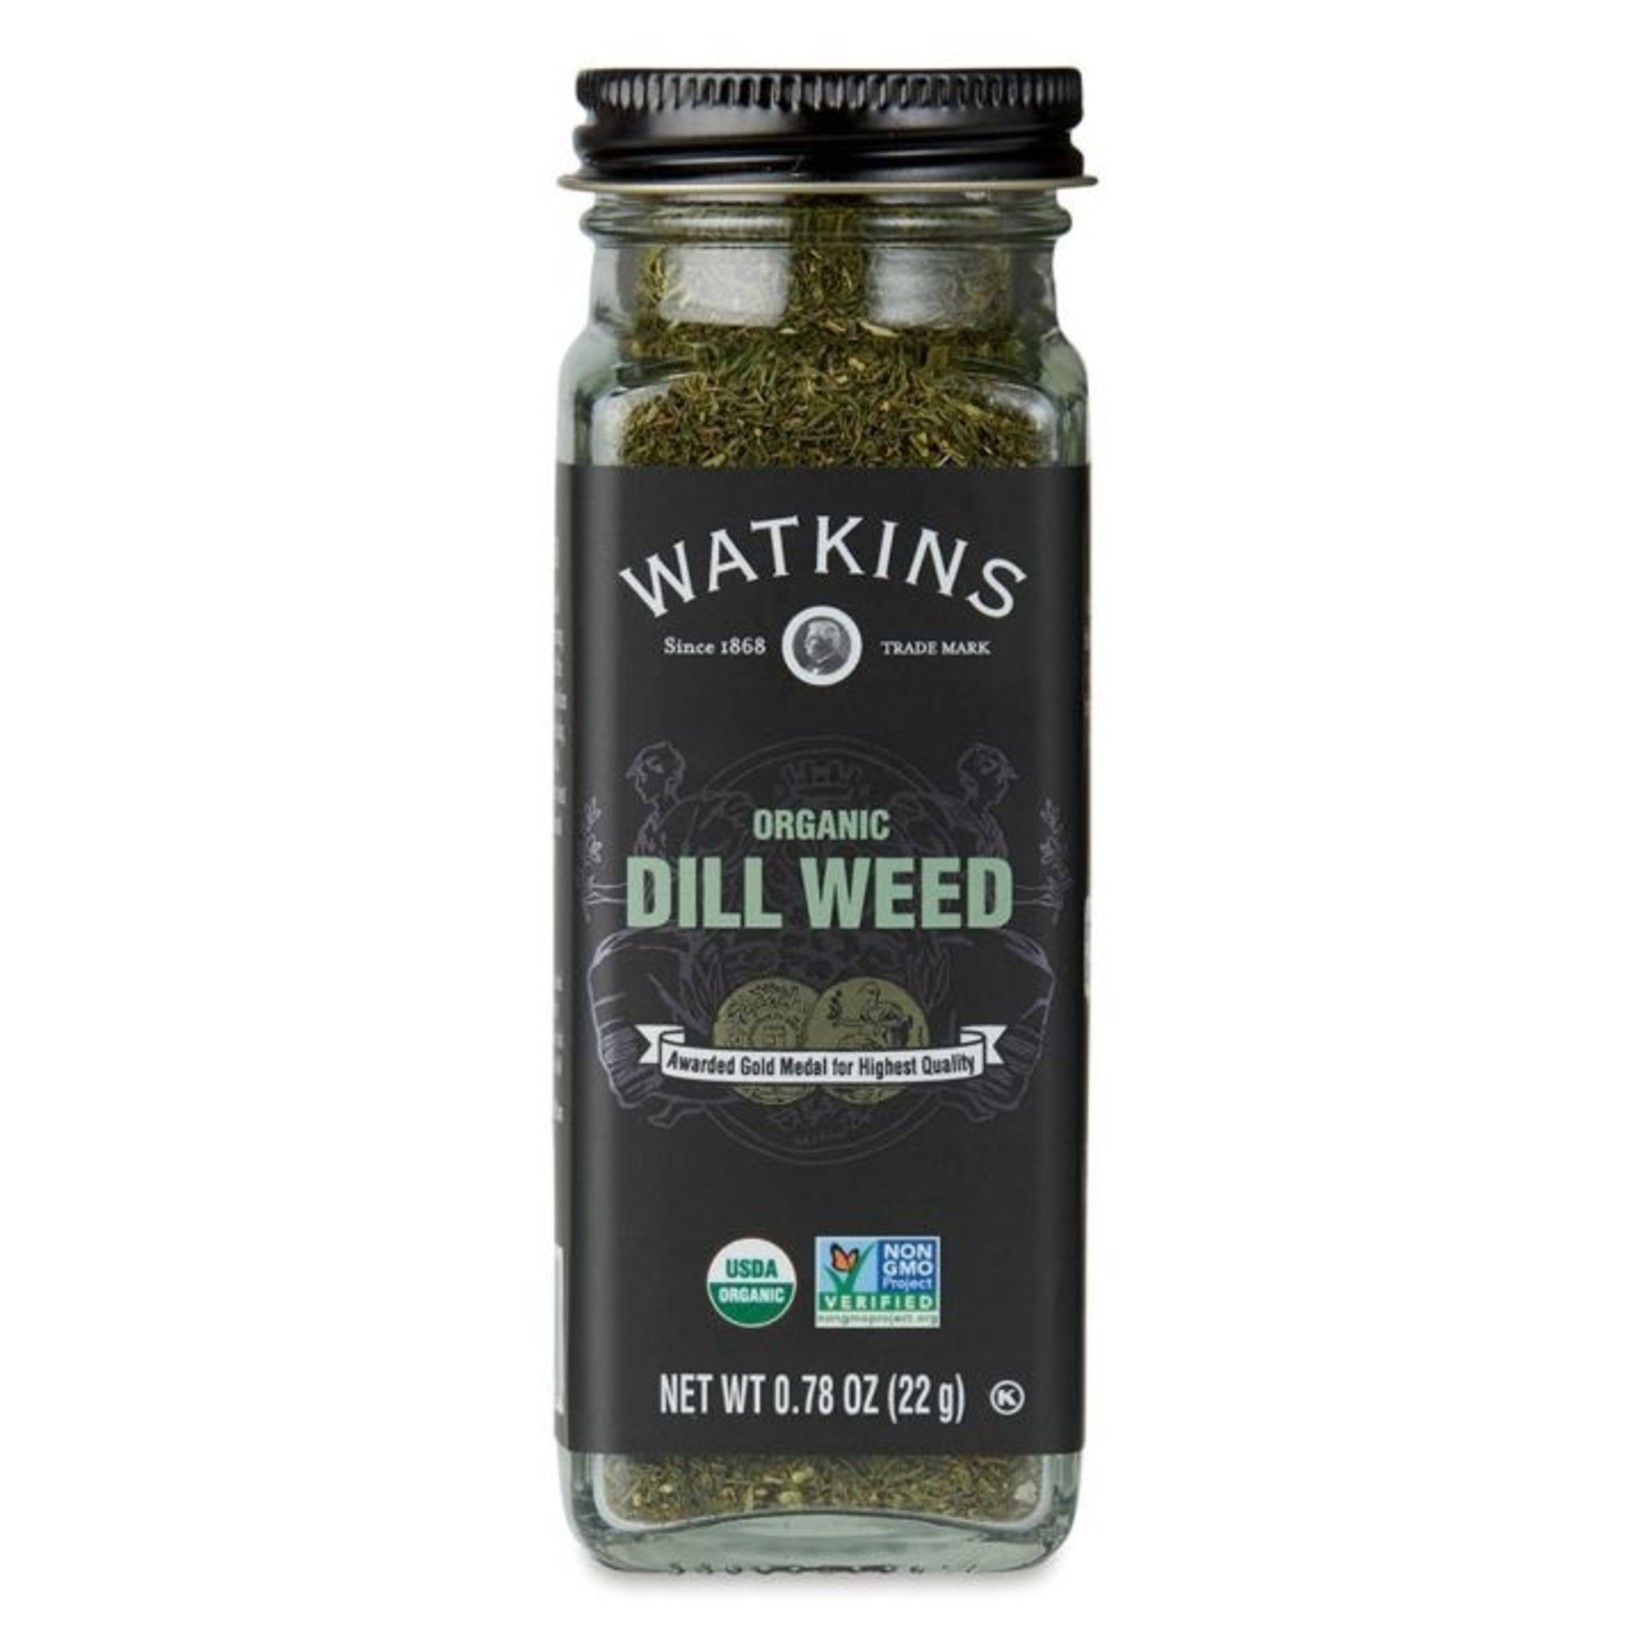 The Watkins Co. Watkins Organic Dill Weed